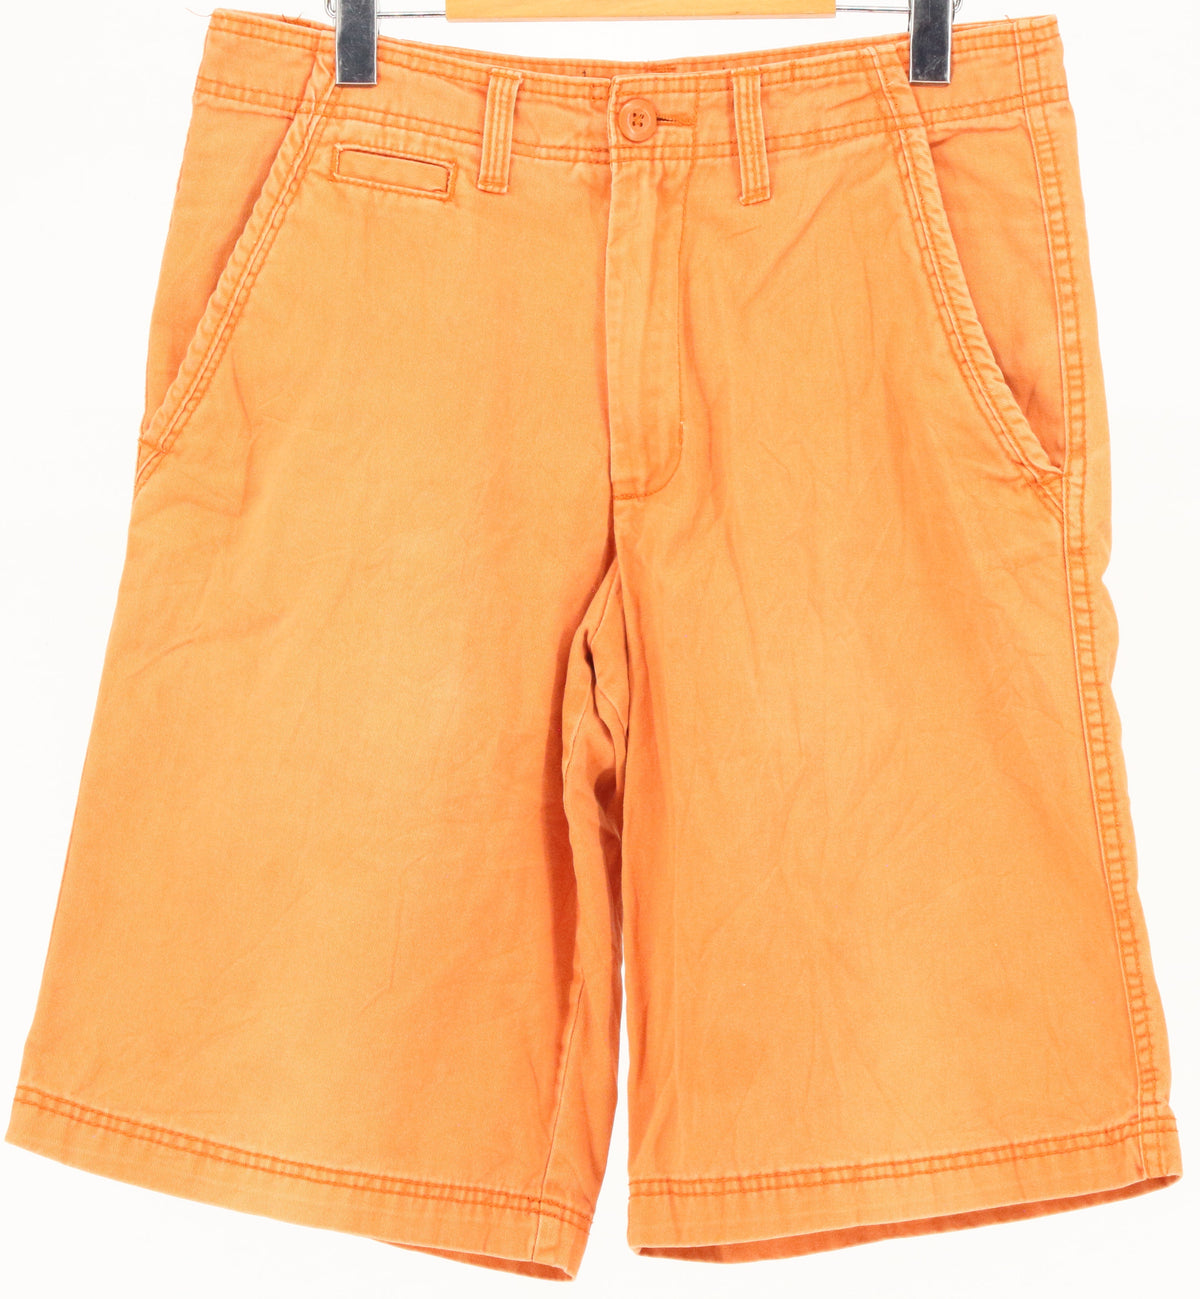 OP Orange Shorts 32"